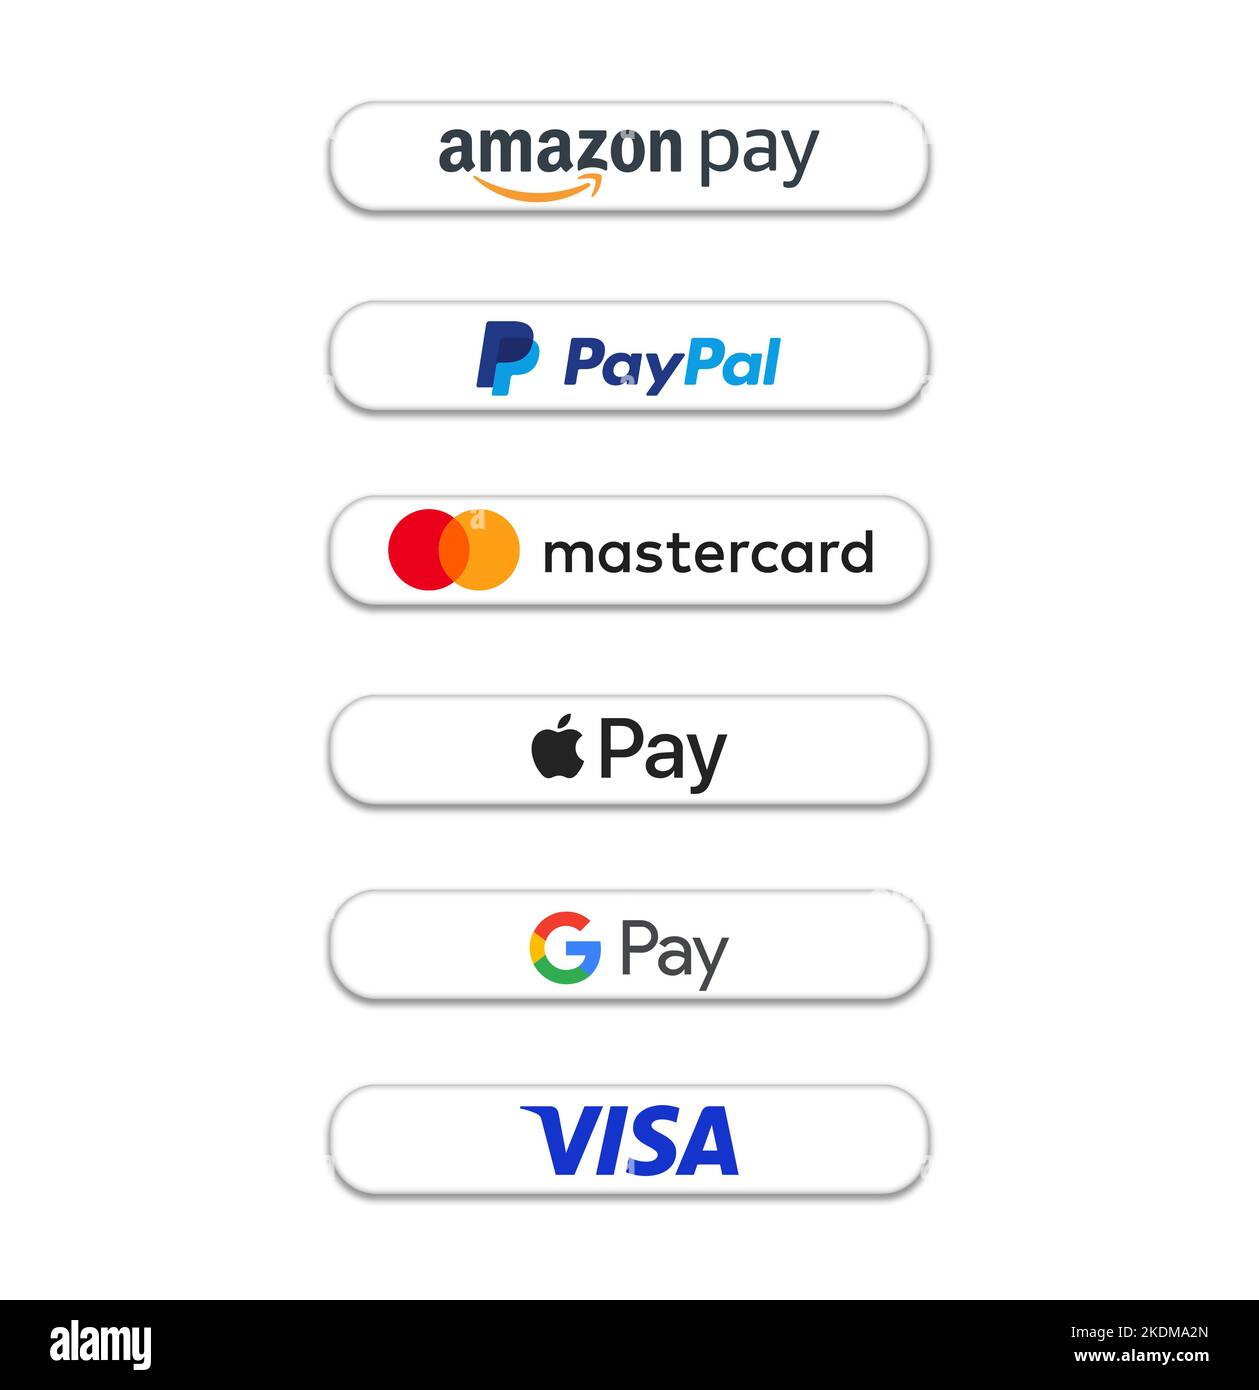 Sistema de pago en América a través de Amazon Pay, Paypal, Mastercard, Apple Pay, Google Pay y Visa Foto de stock